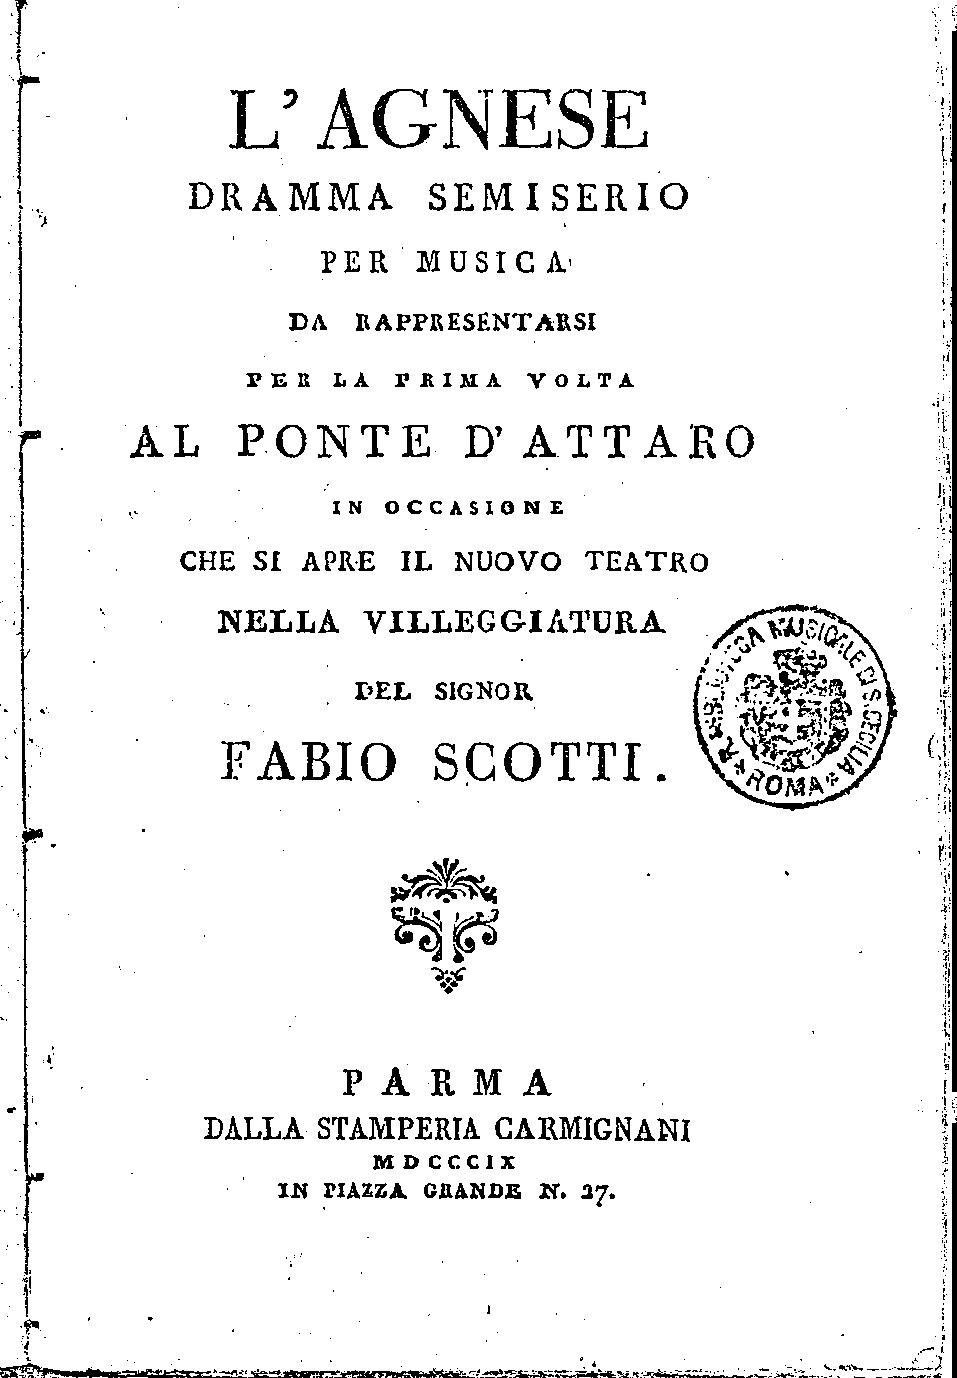 The original libretto of 1809